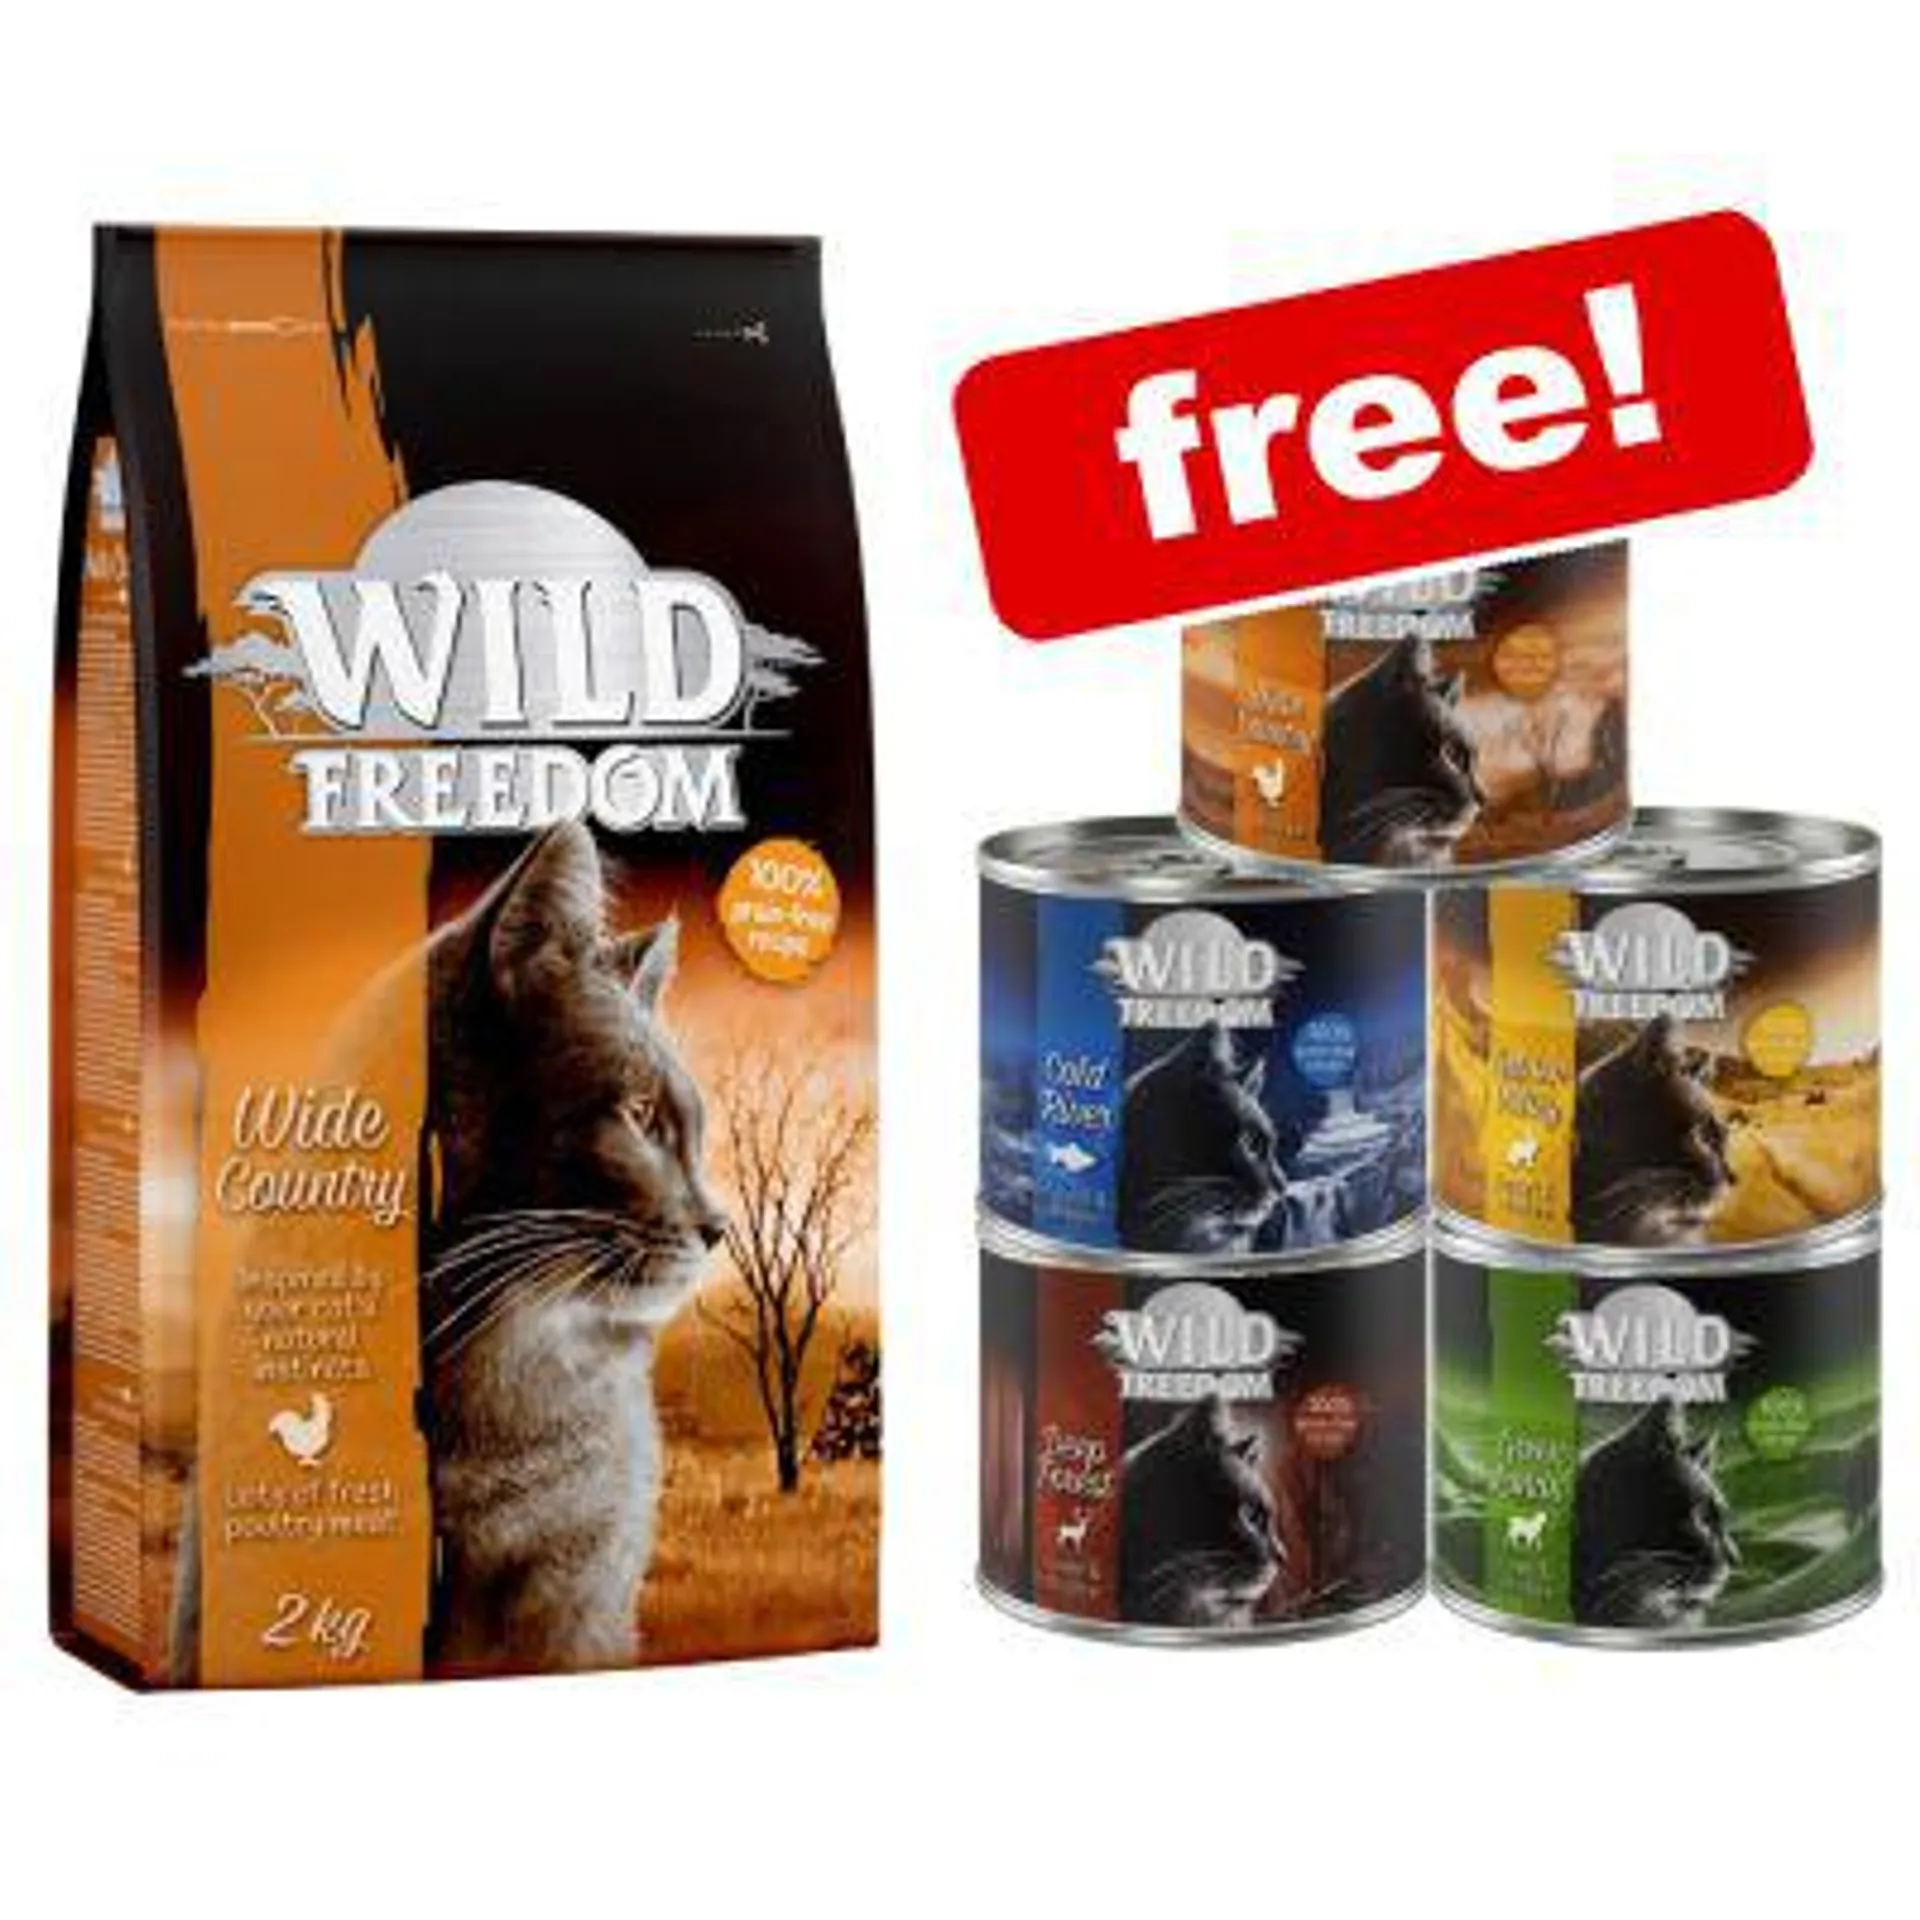 6kg Wild Freedom Dry Cat Food + 6 x 200g Wild Freedom Wet Cat Food Free!*